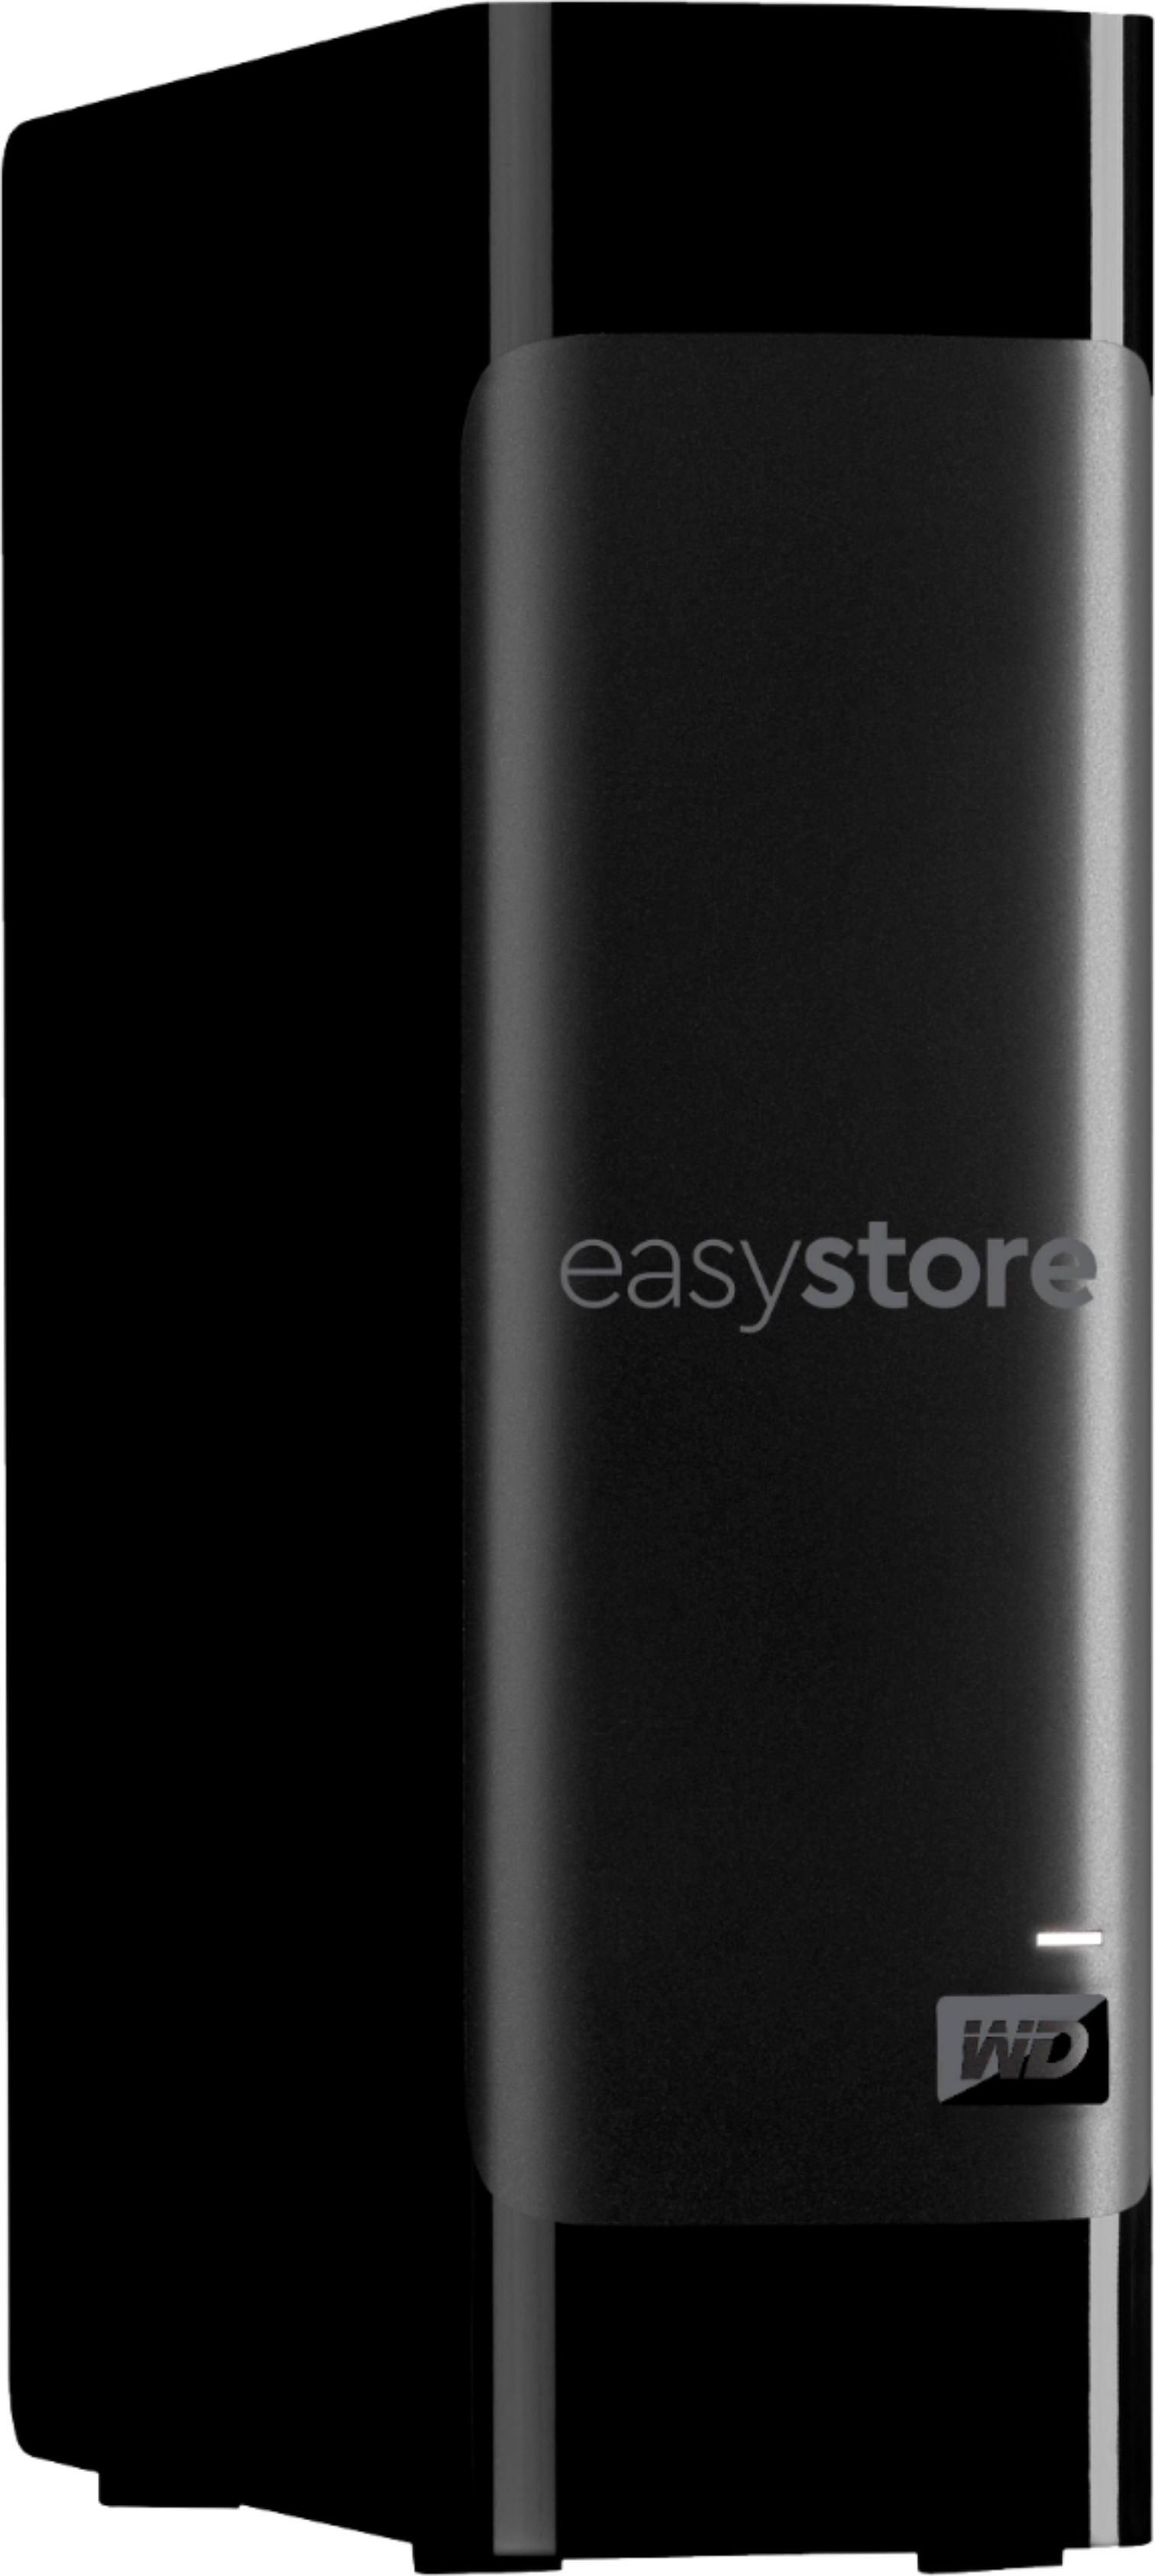 WD easystore 14TB USB WDBAMA0140HBK-NESN Hard External Drive Best Buy Black 3.0 